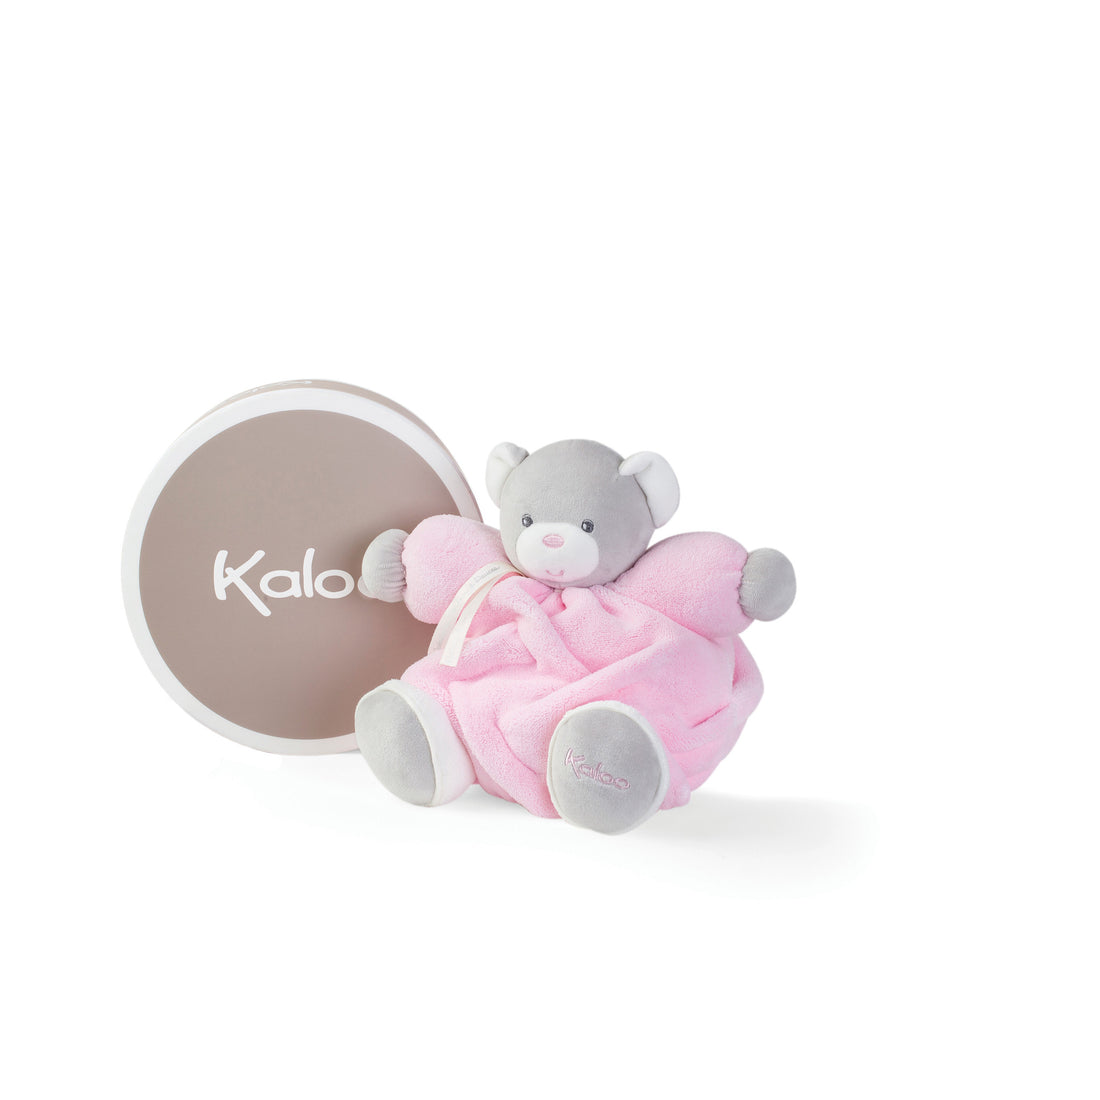 kaloo-plume-medium-pink-chubby-bear- (2)